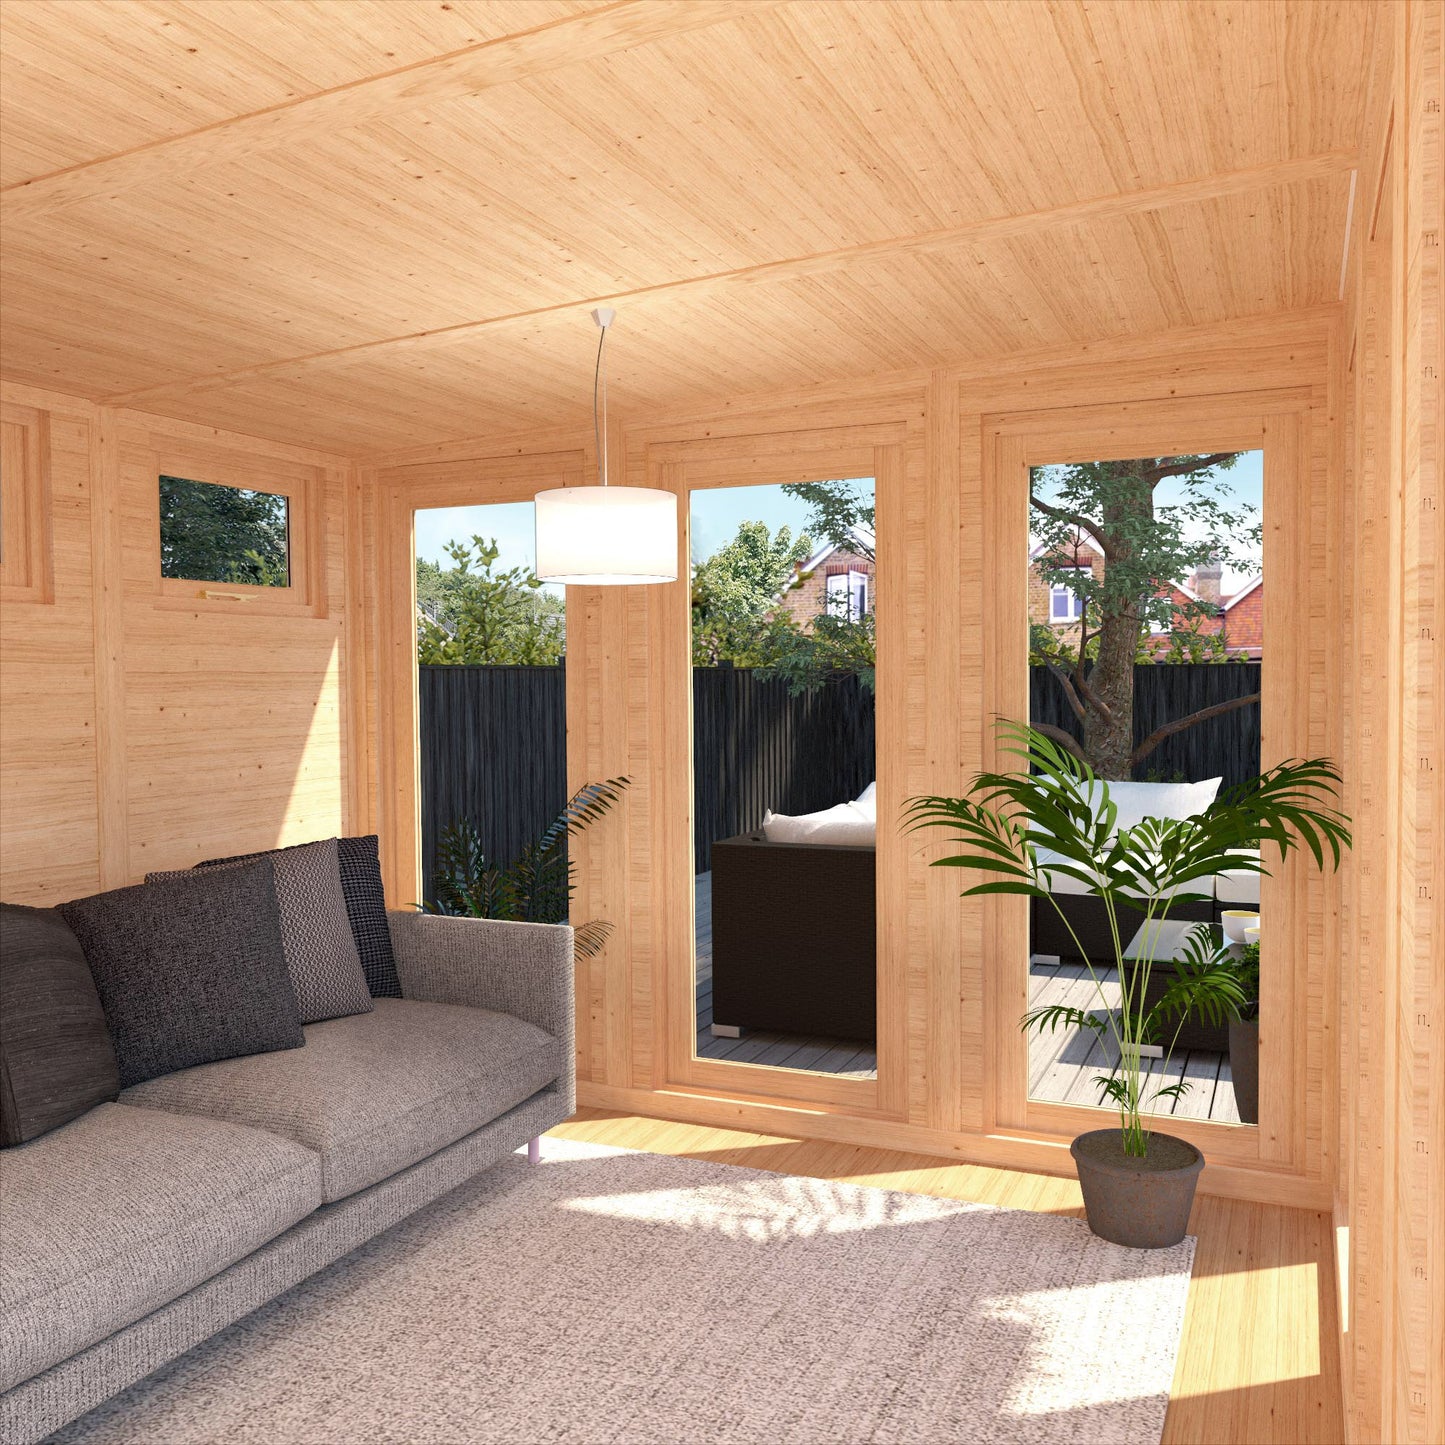 The Edwinstowe 4m x 4m Premium Insulated Garden Room